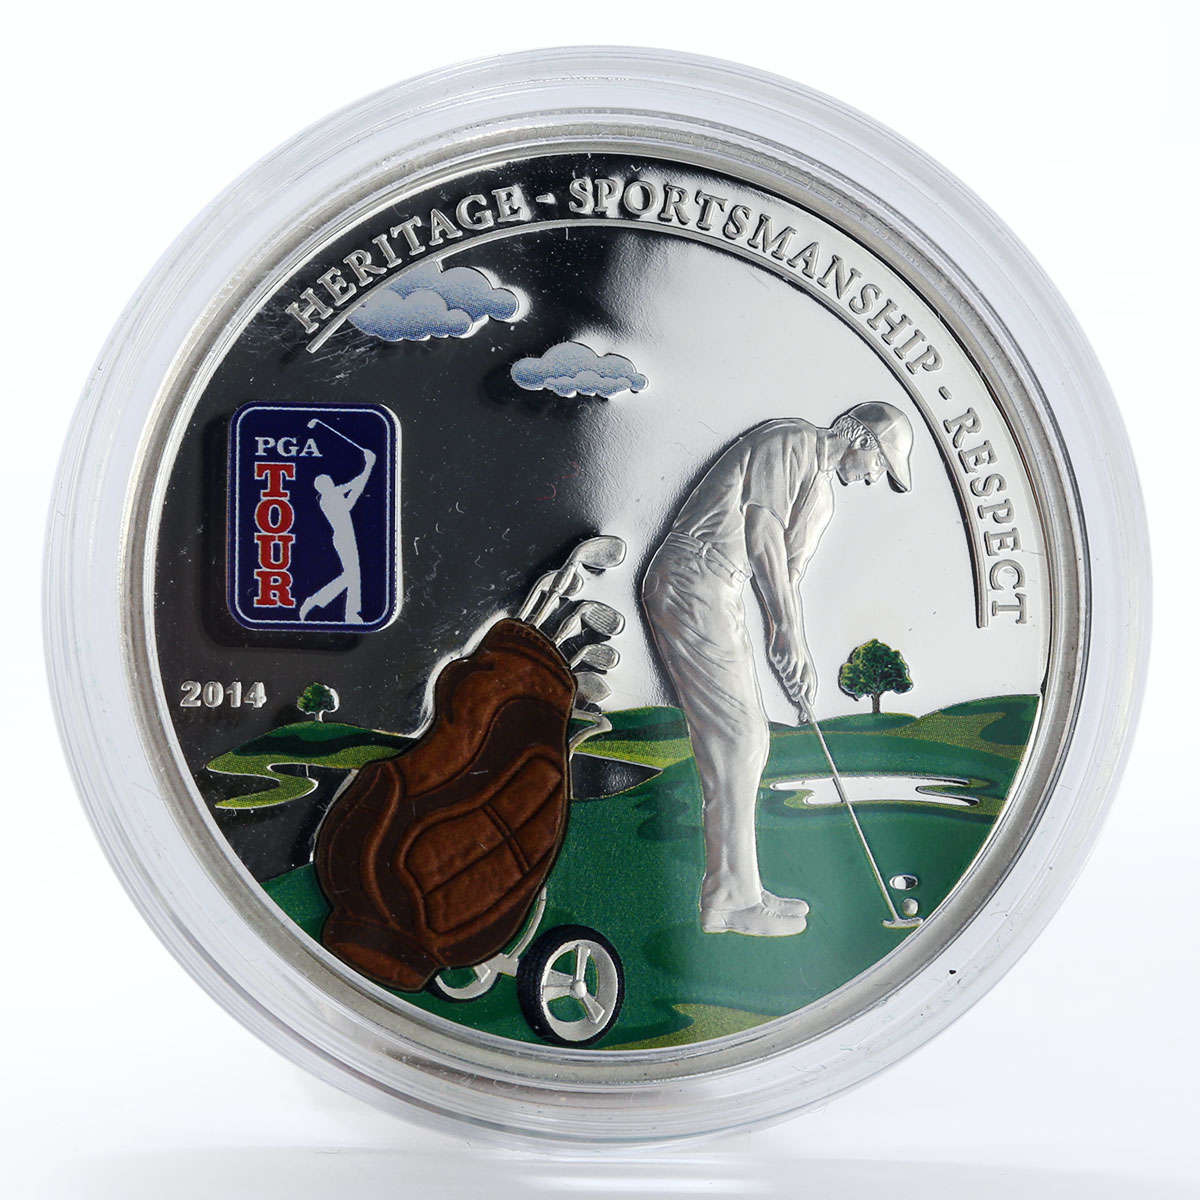 Cook Islands 5 dollars PGA Tour - Golf Bag silver proof coin 2014